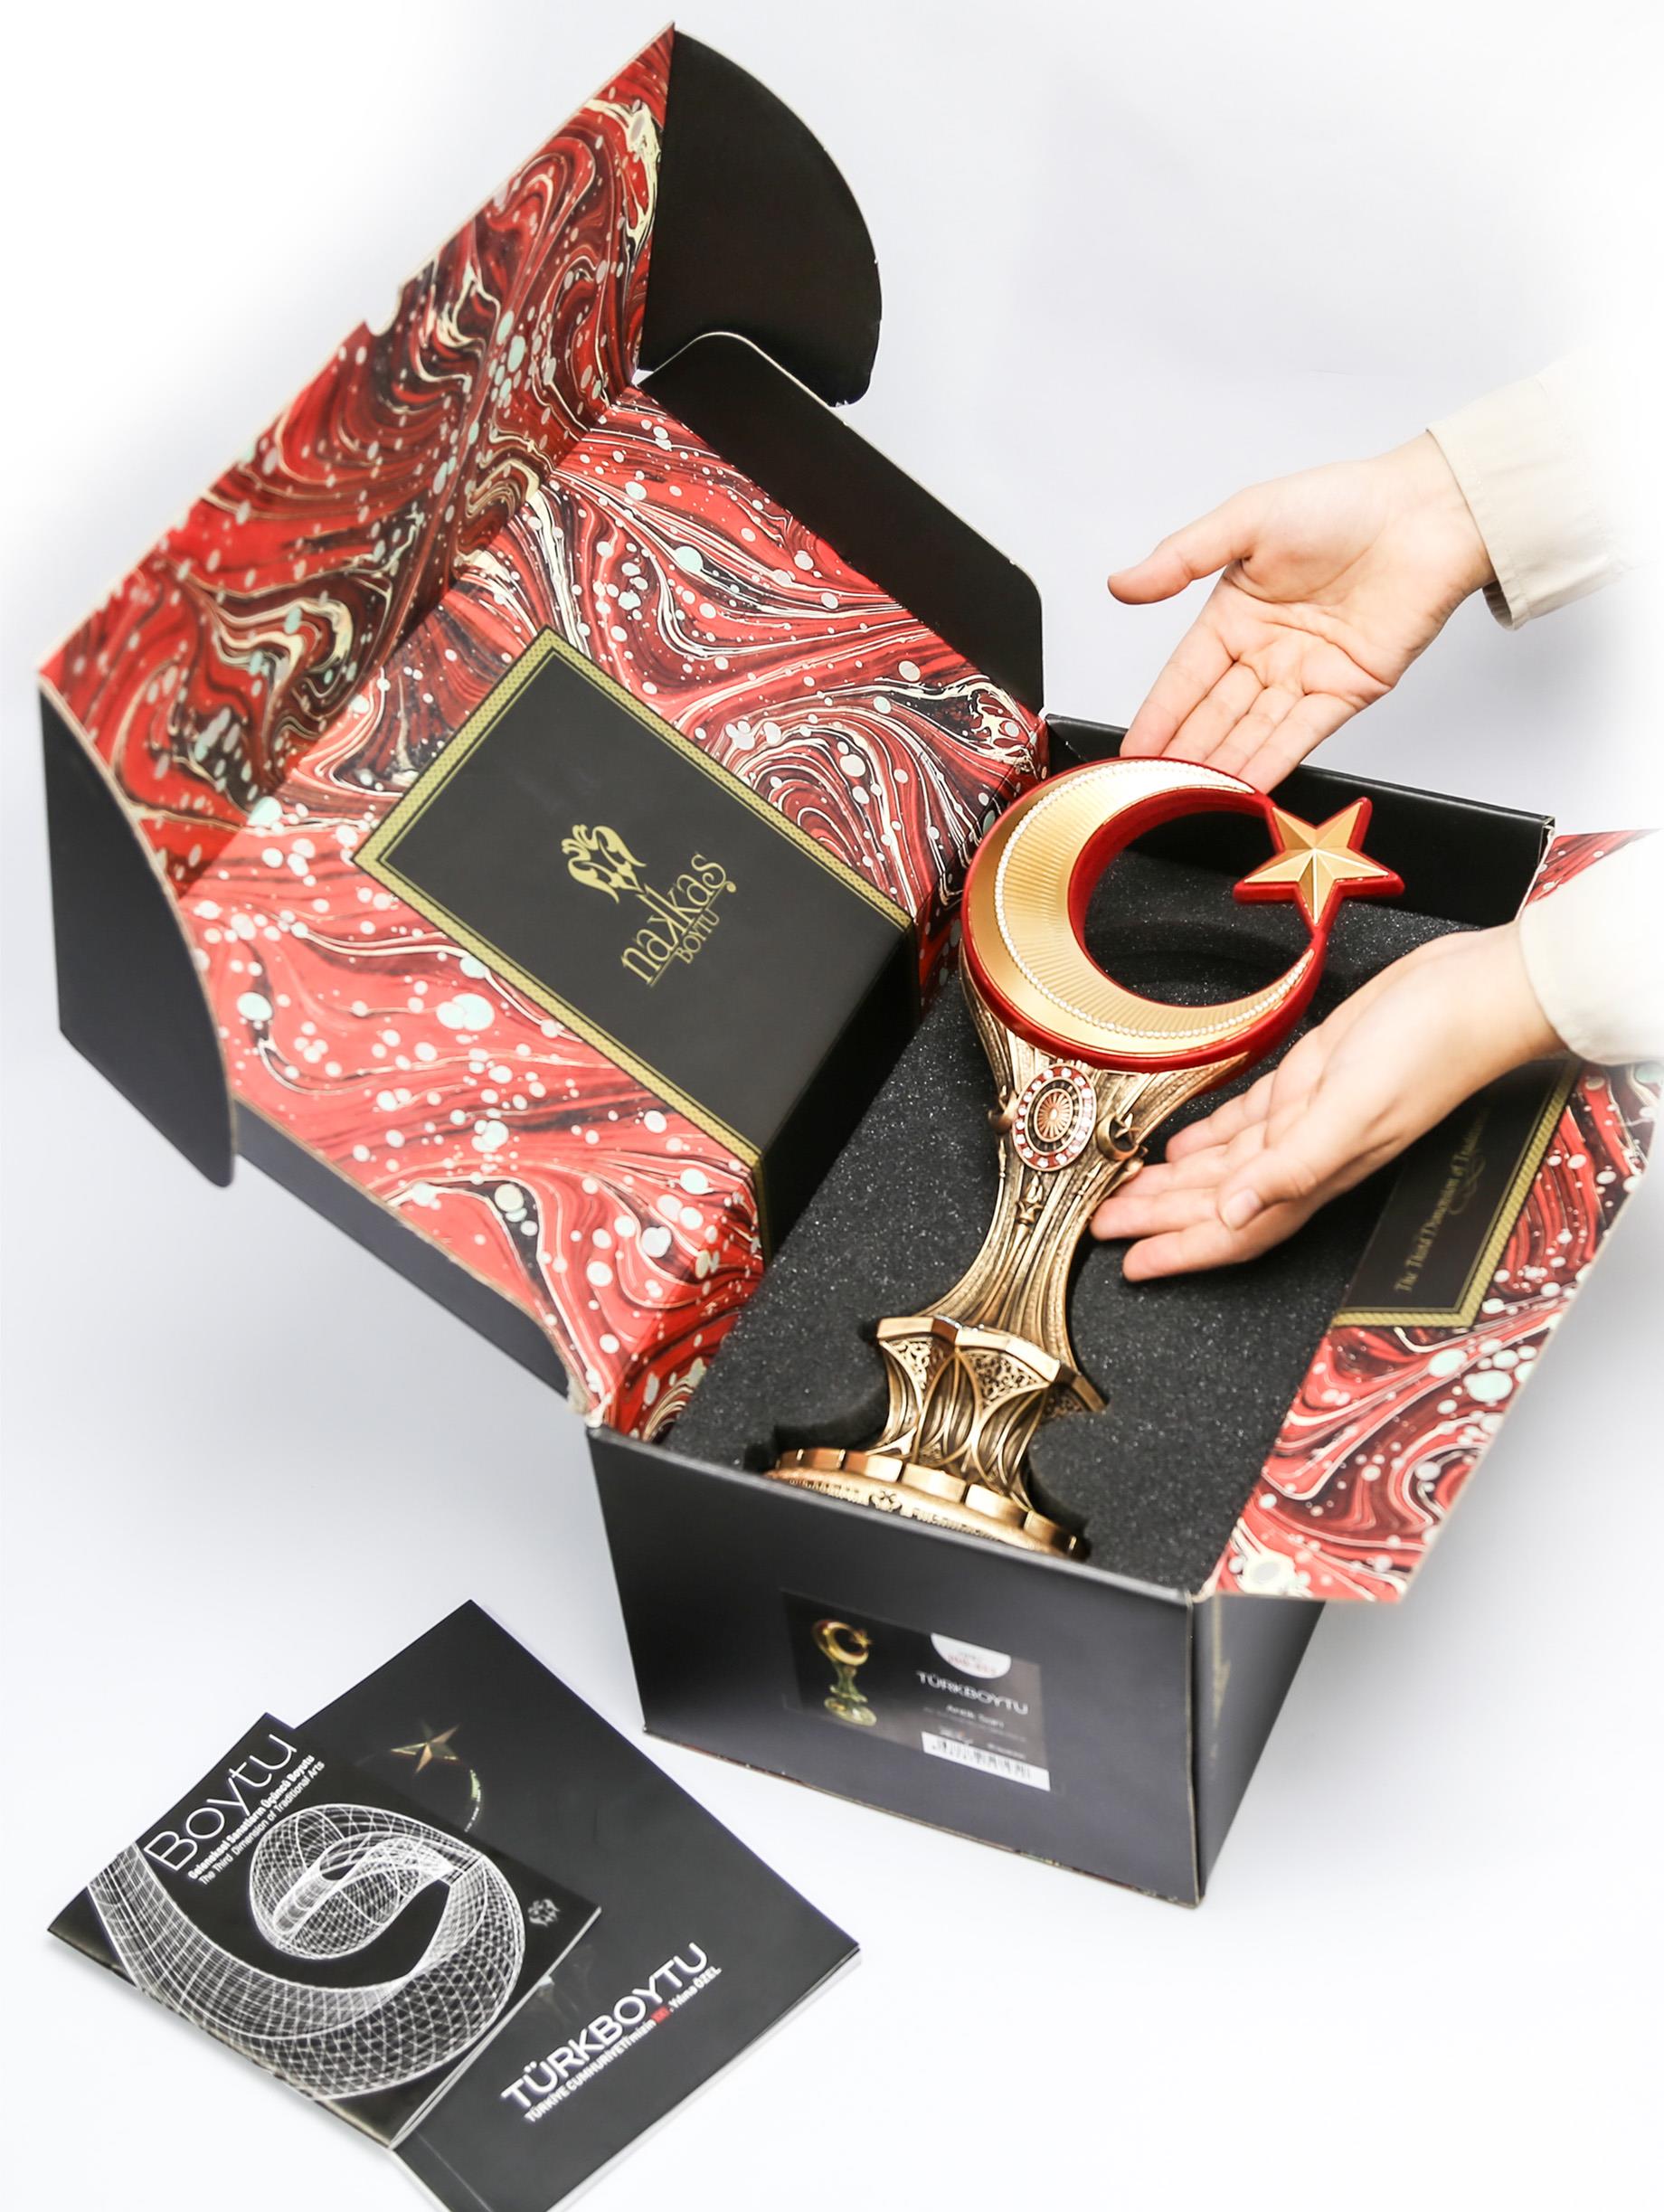 TurkBoytu - Türkiye 100th Anniversary Special Product